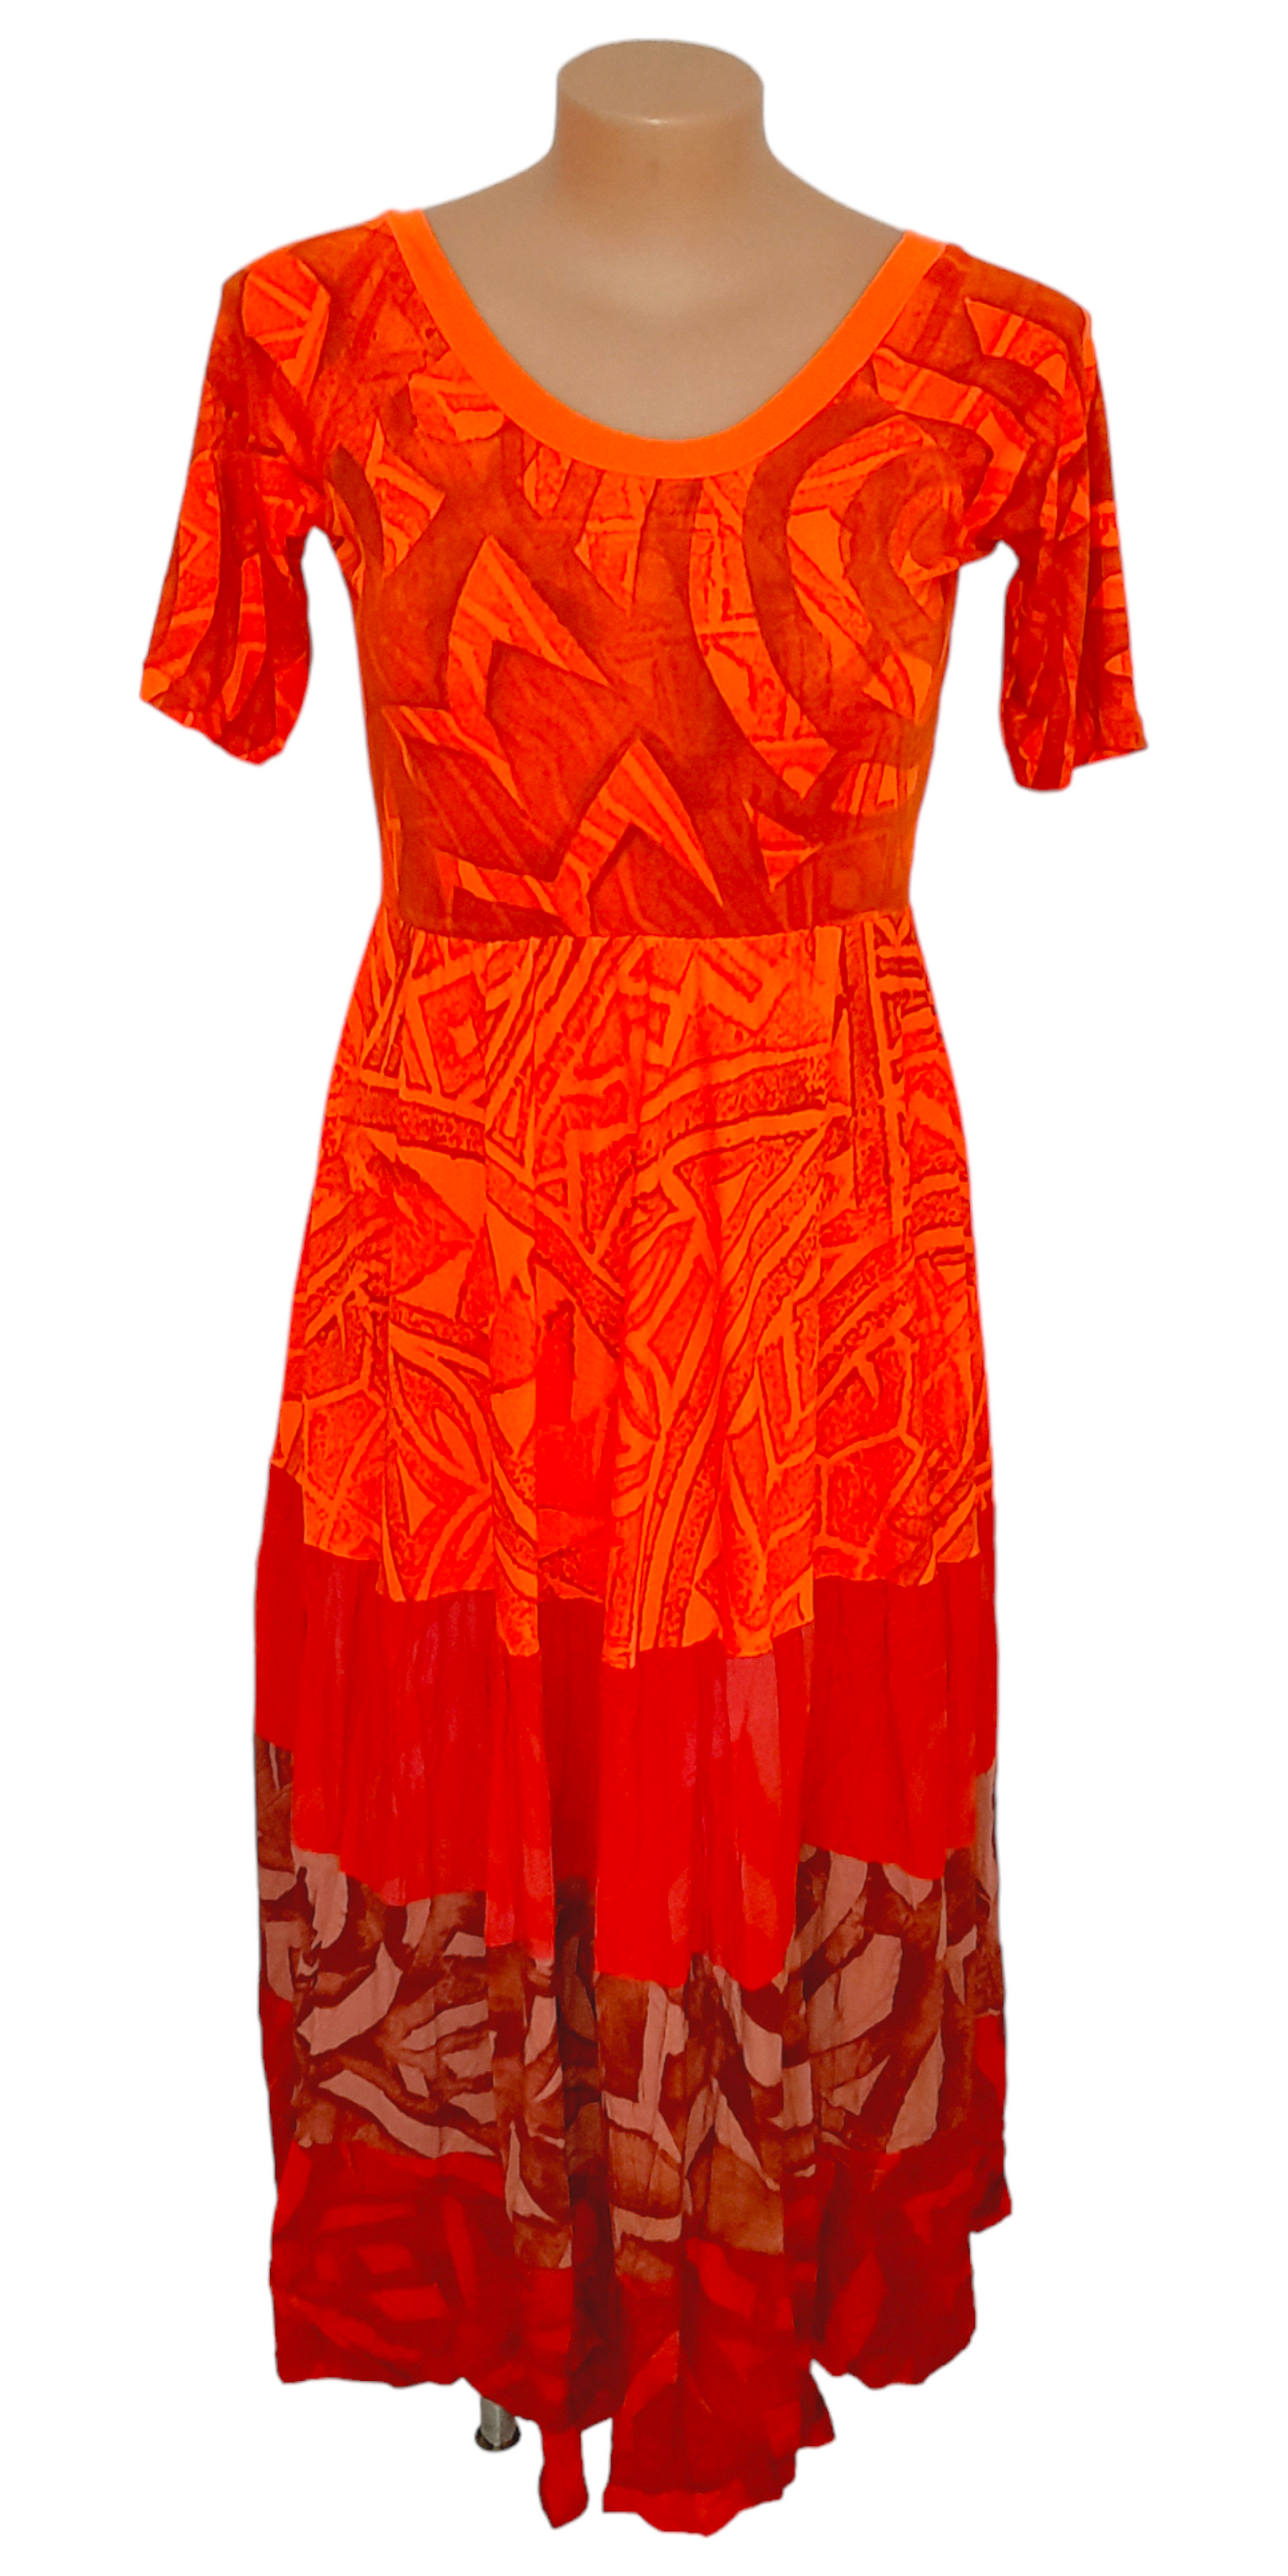 Aulelei Eva Dress Orange 18